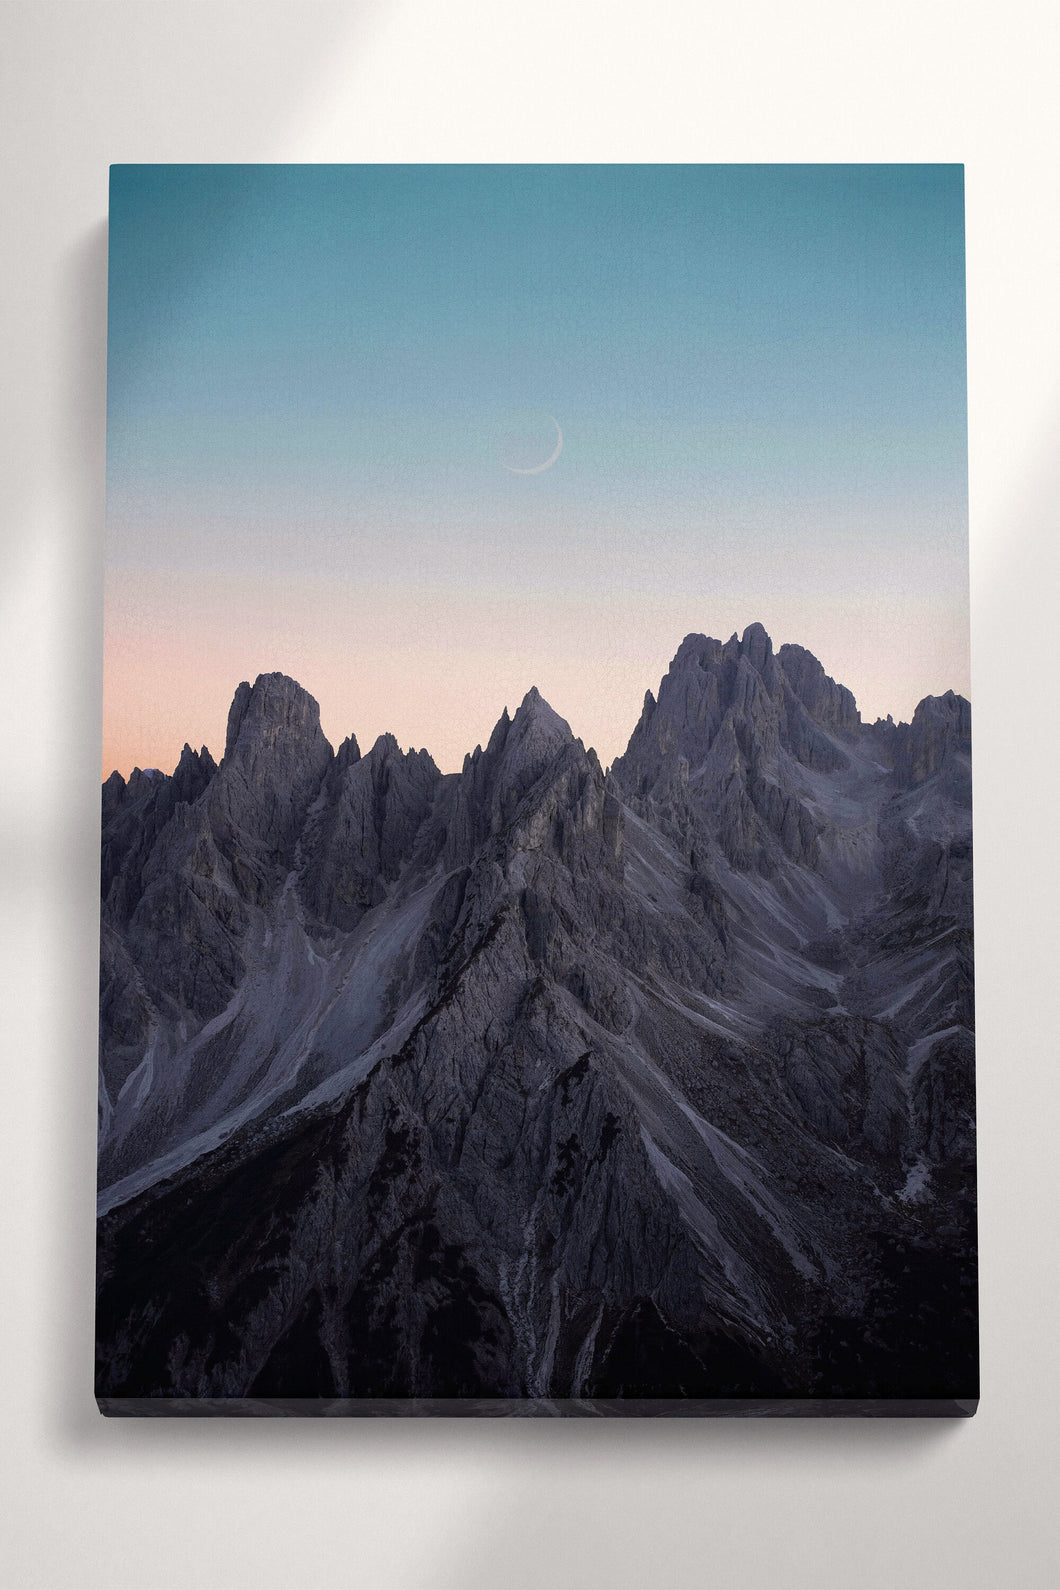 Dolomites Alps Auronzo di Cadore Mountain Canvas Wall Art Home Decor Eco Leather Print